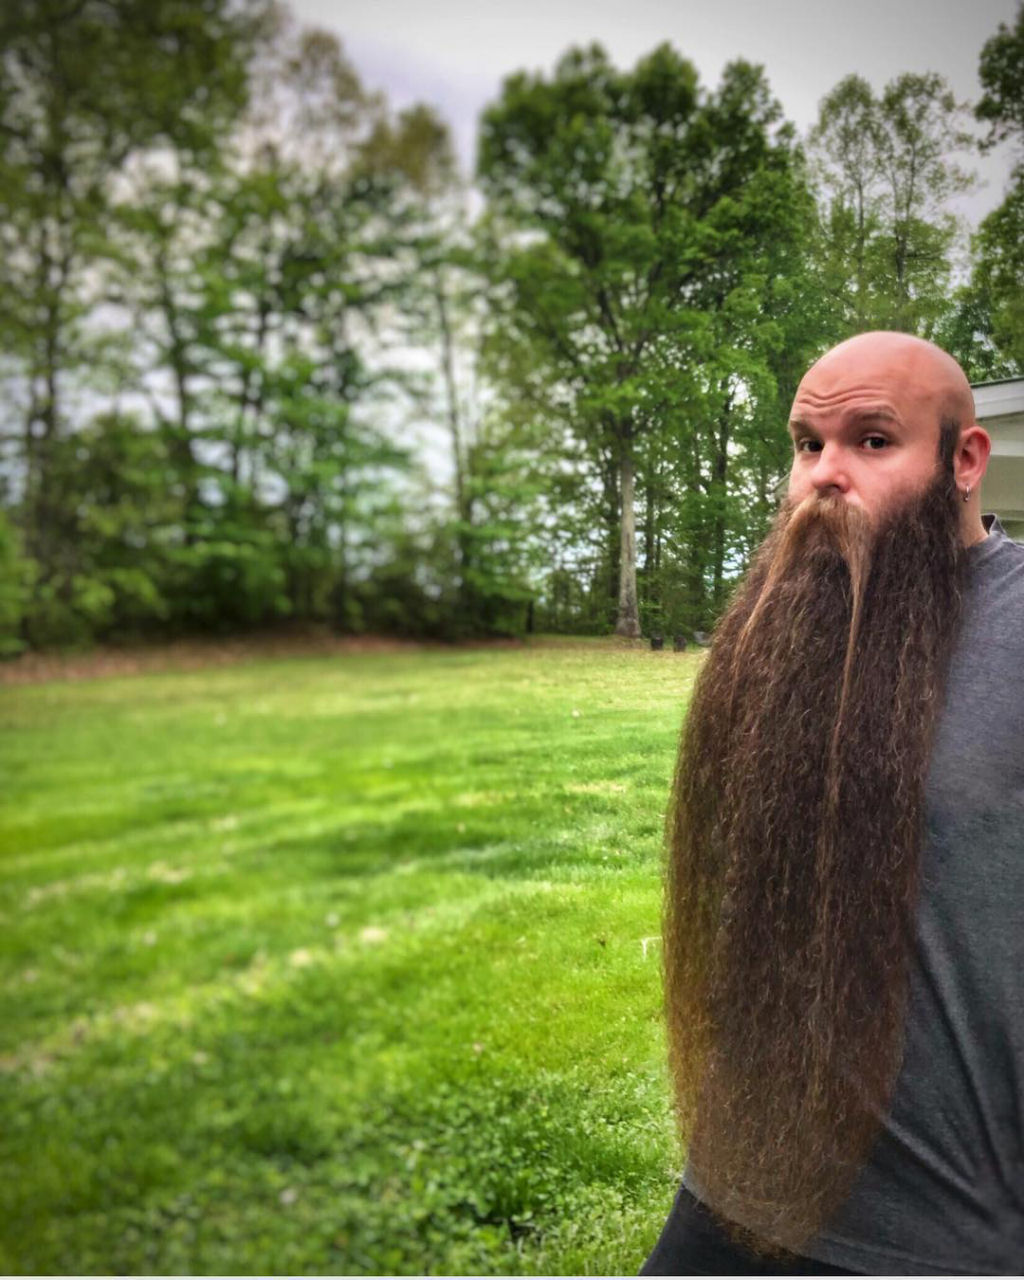 Este cara cultiva sua barba de 75 centímetros faz 5 anos